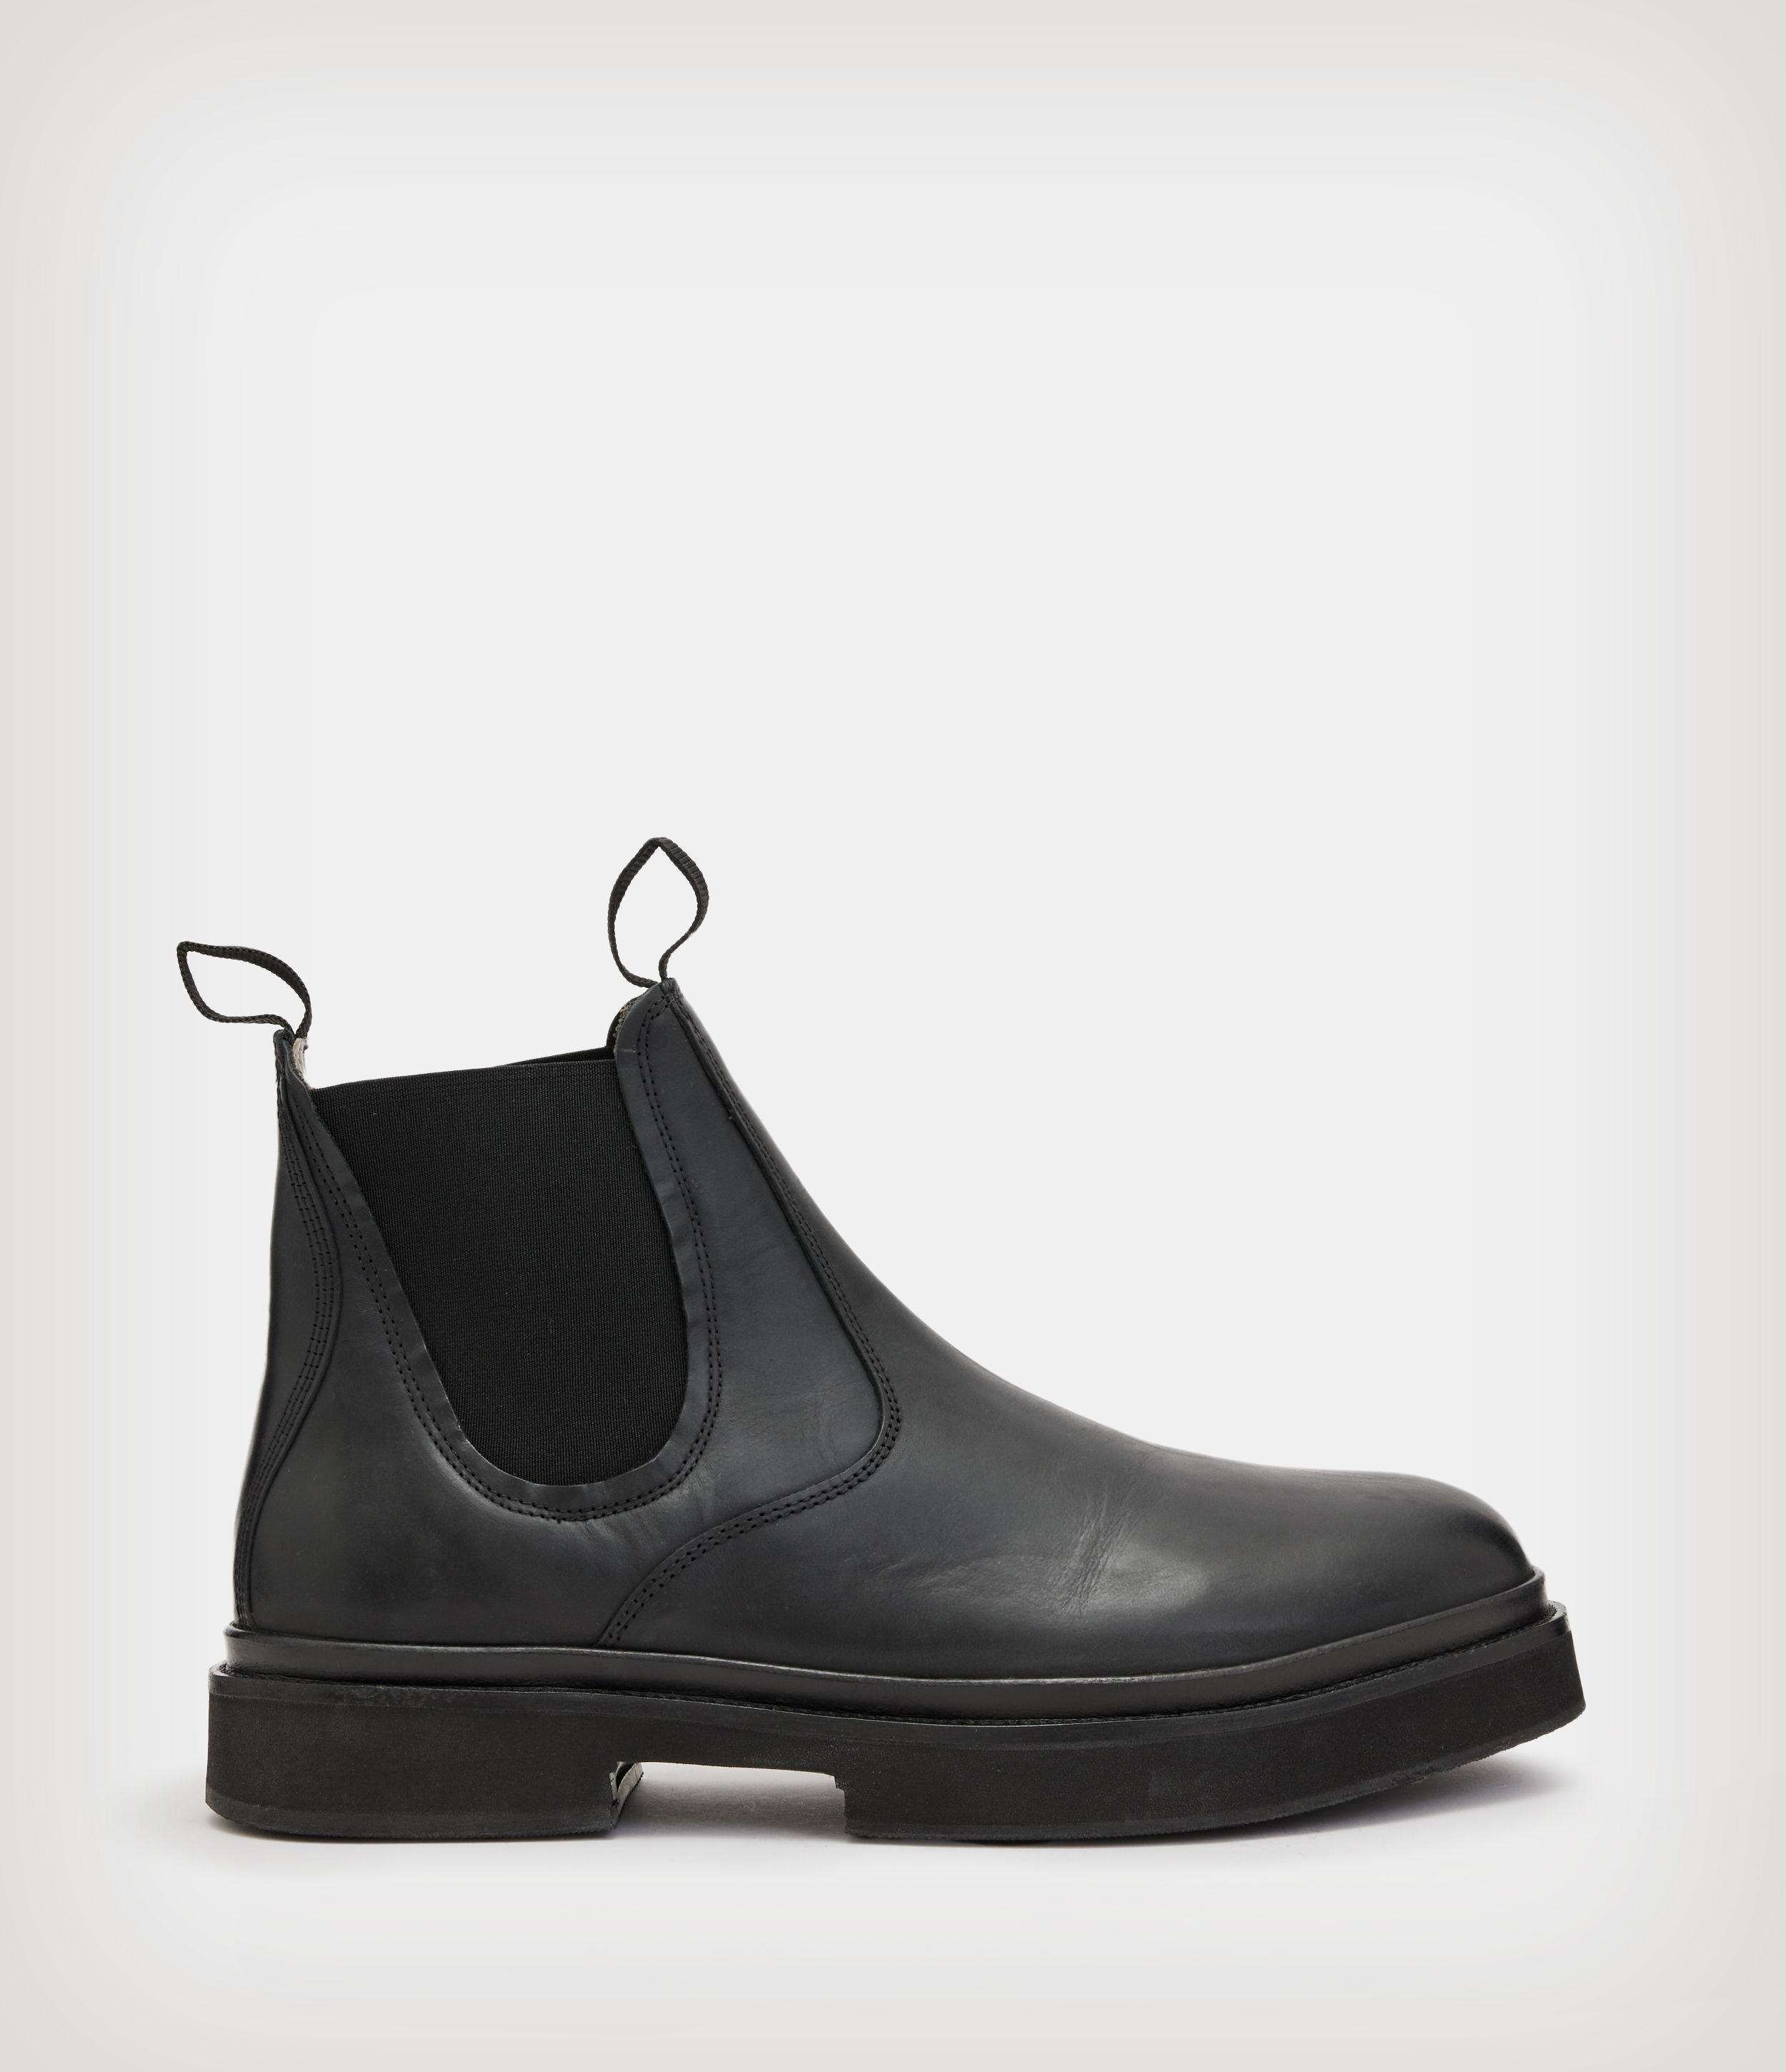 AllSaints Men's Jonboy Leather Boots, Black, Size: UK 10/US 11/EU 44